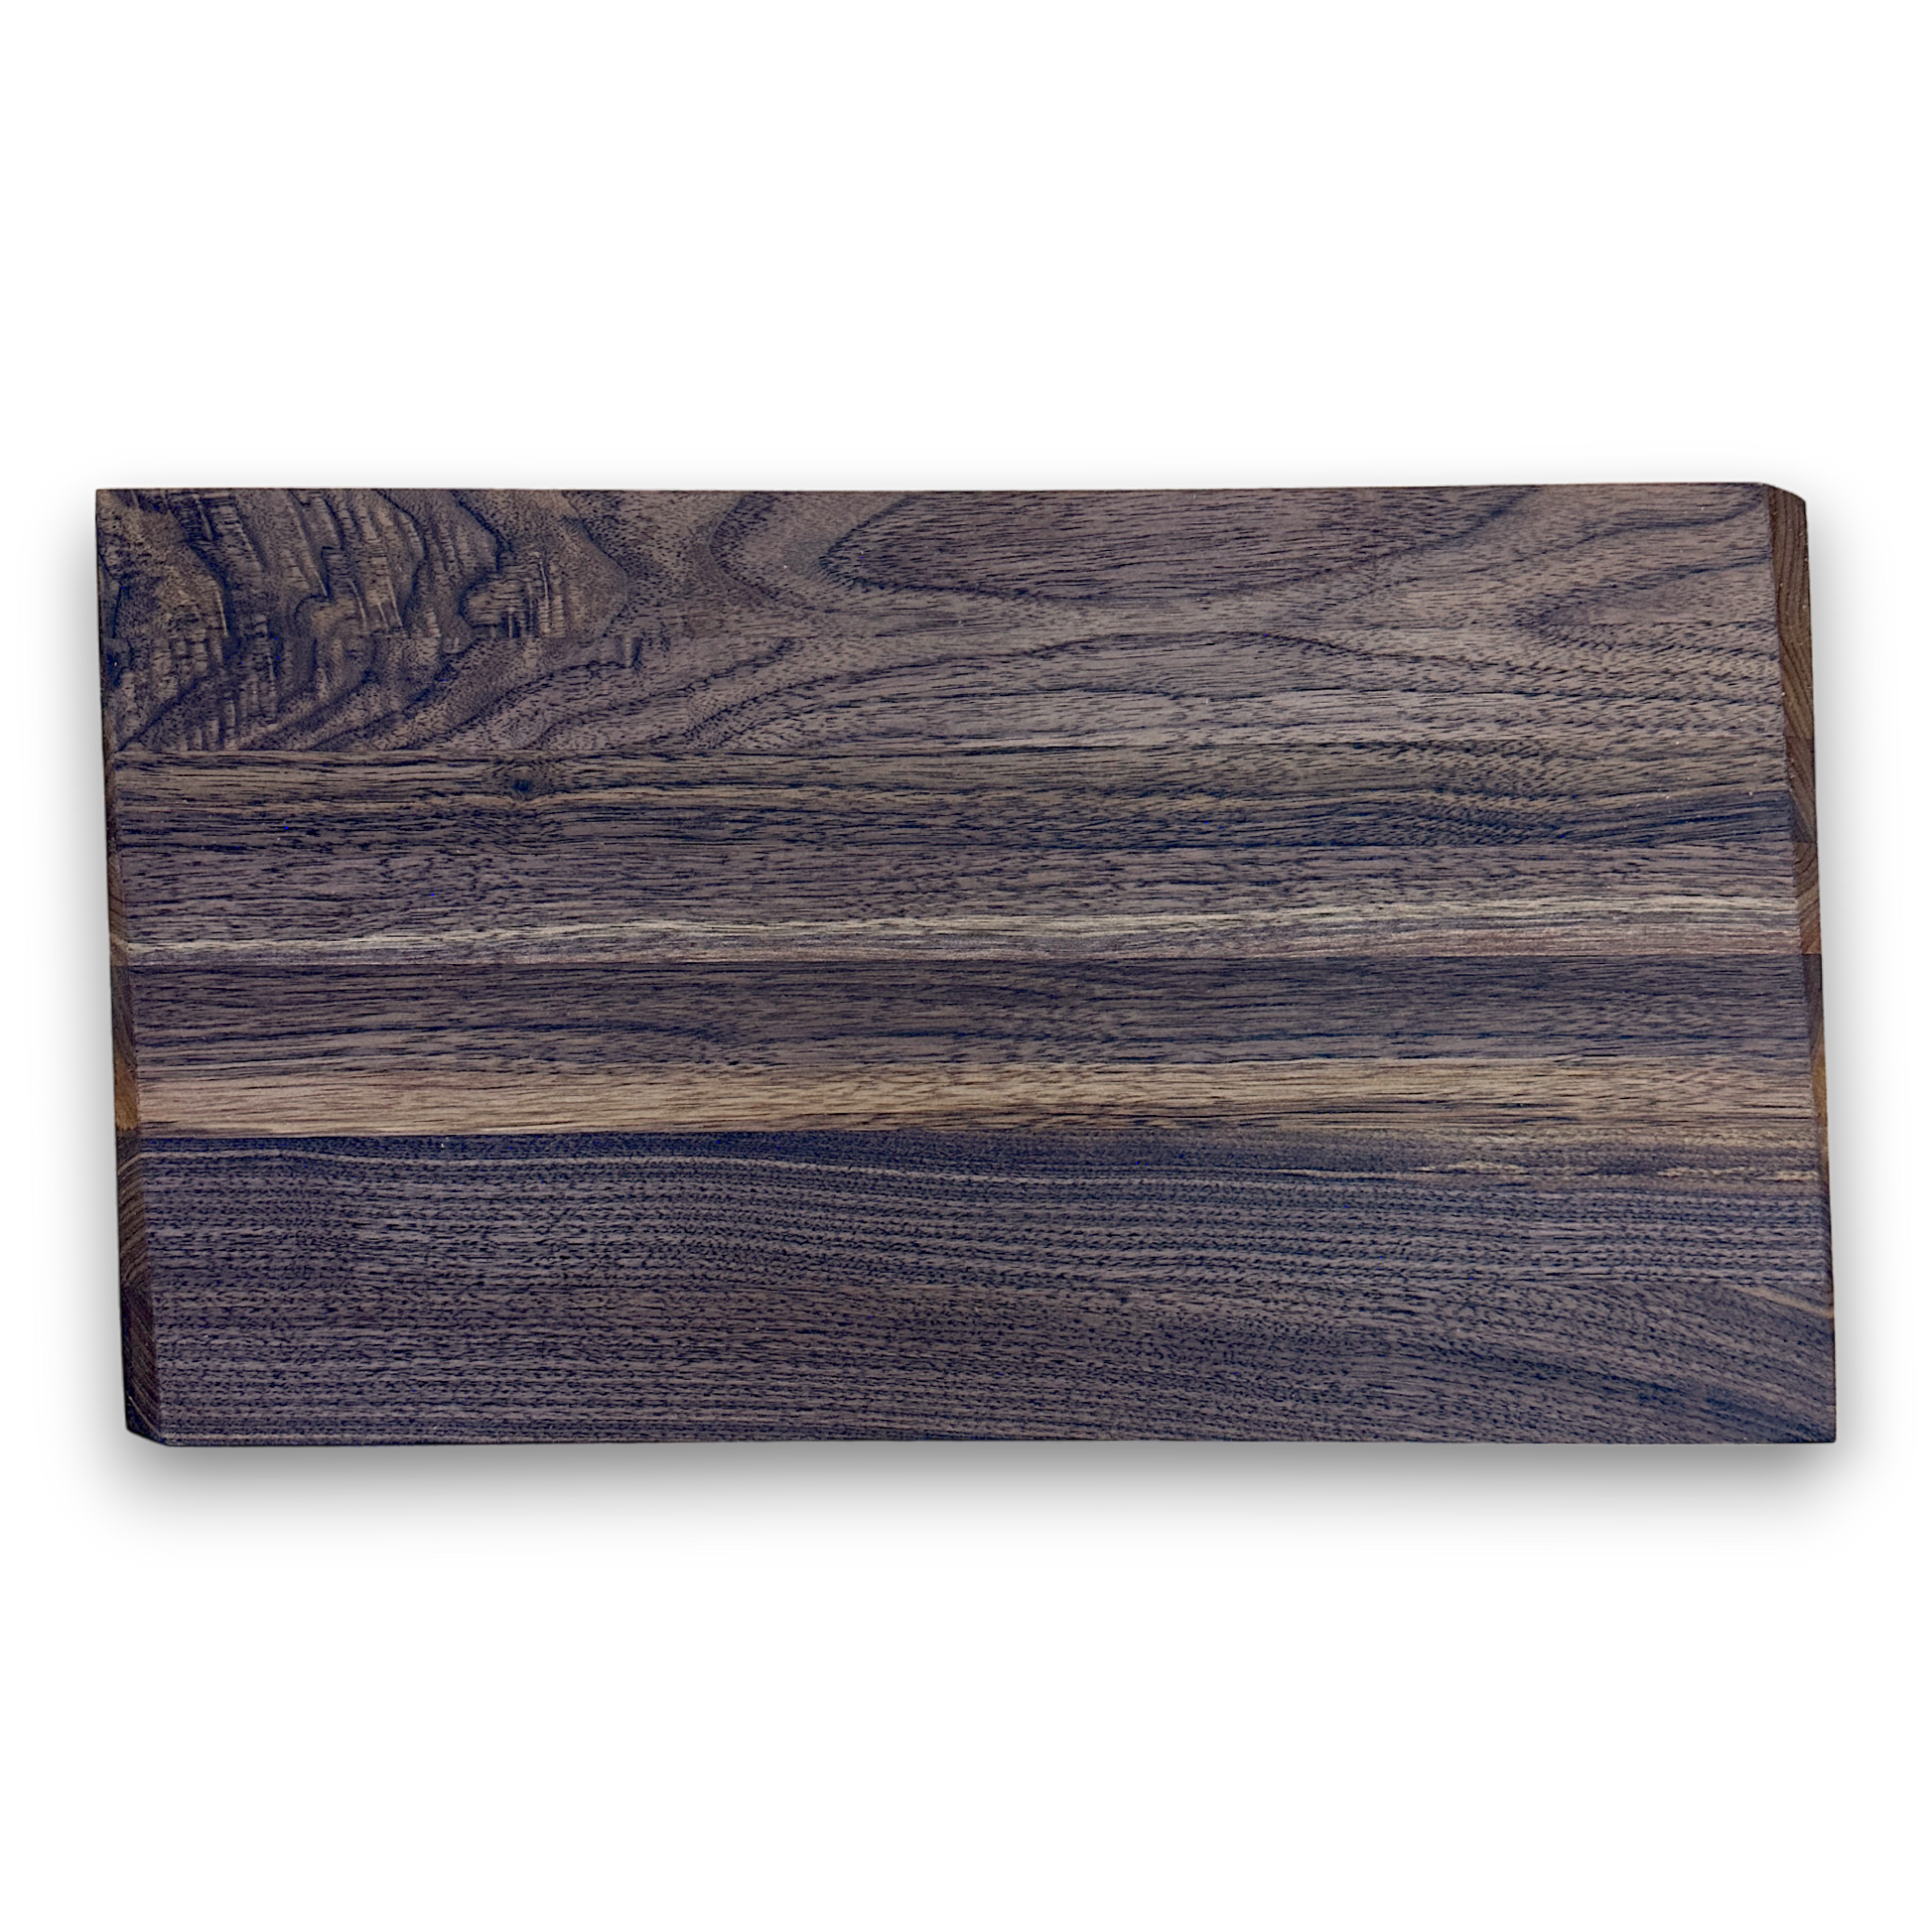 2" Walnut Wood Z-shaped cutting board - BOISWOOD